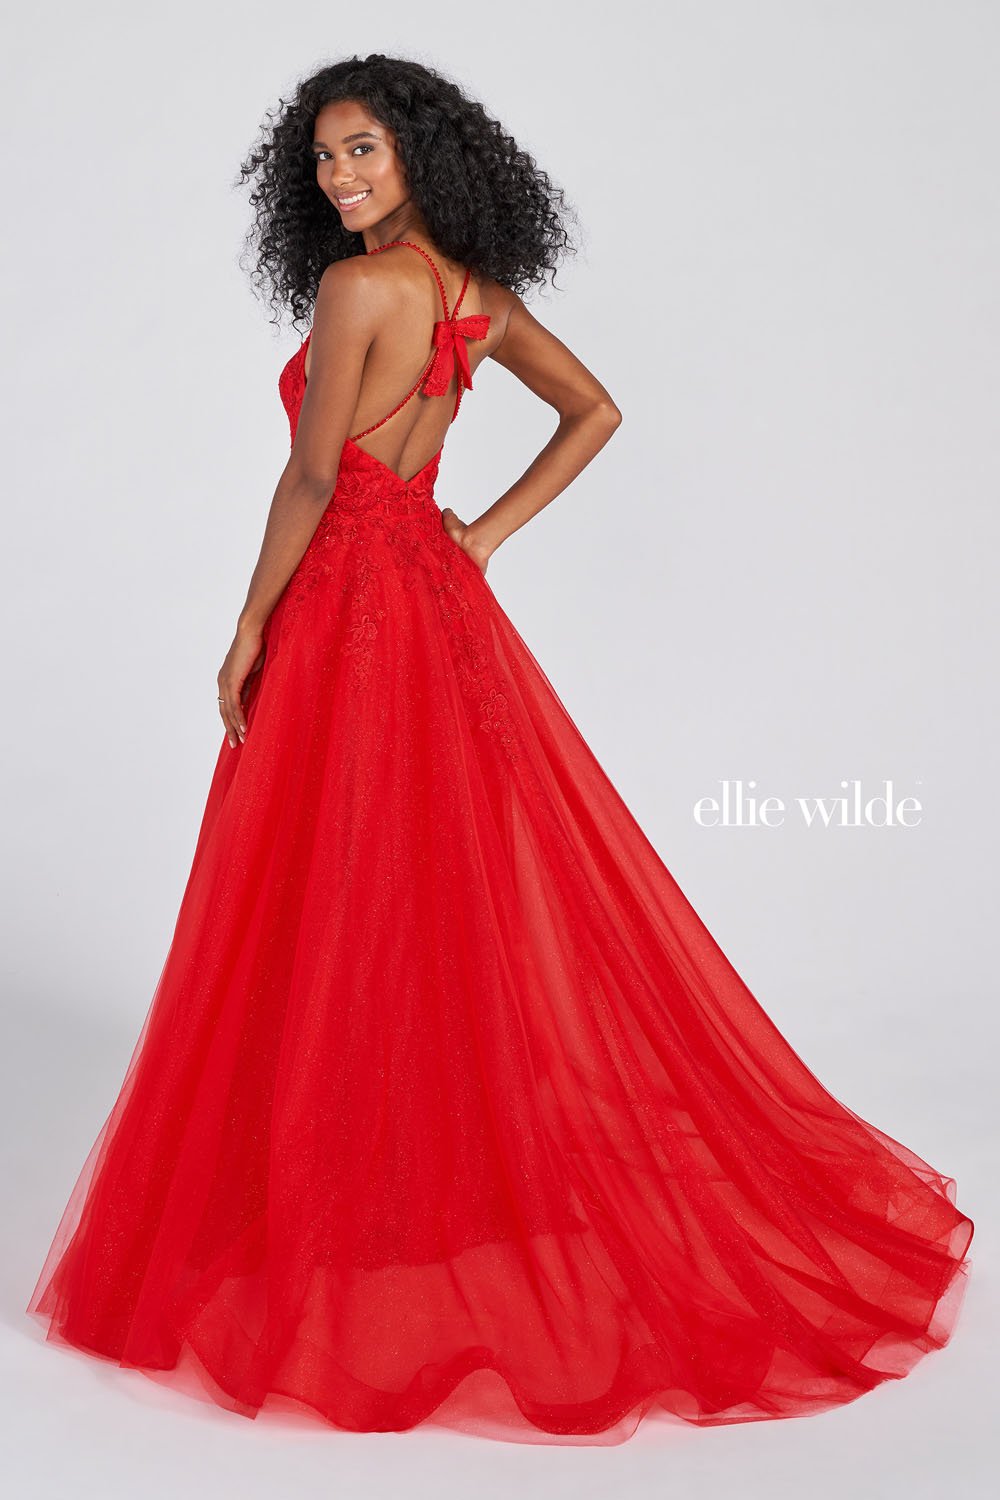 Ellie Wilde Red EW122014 Prom Dress Image.  Red formal dress.